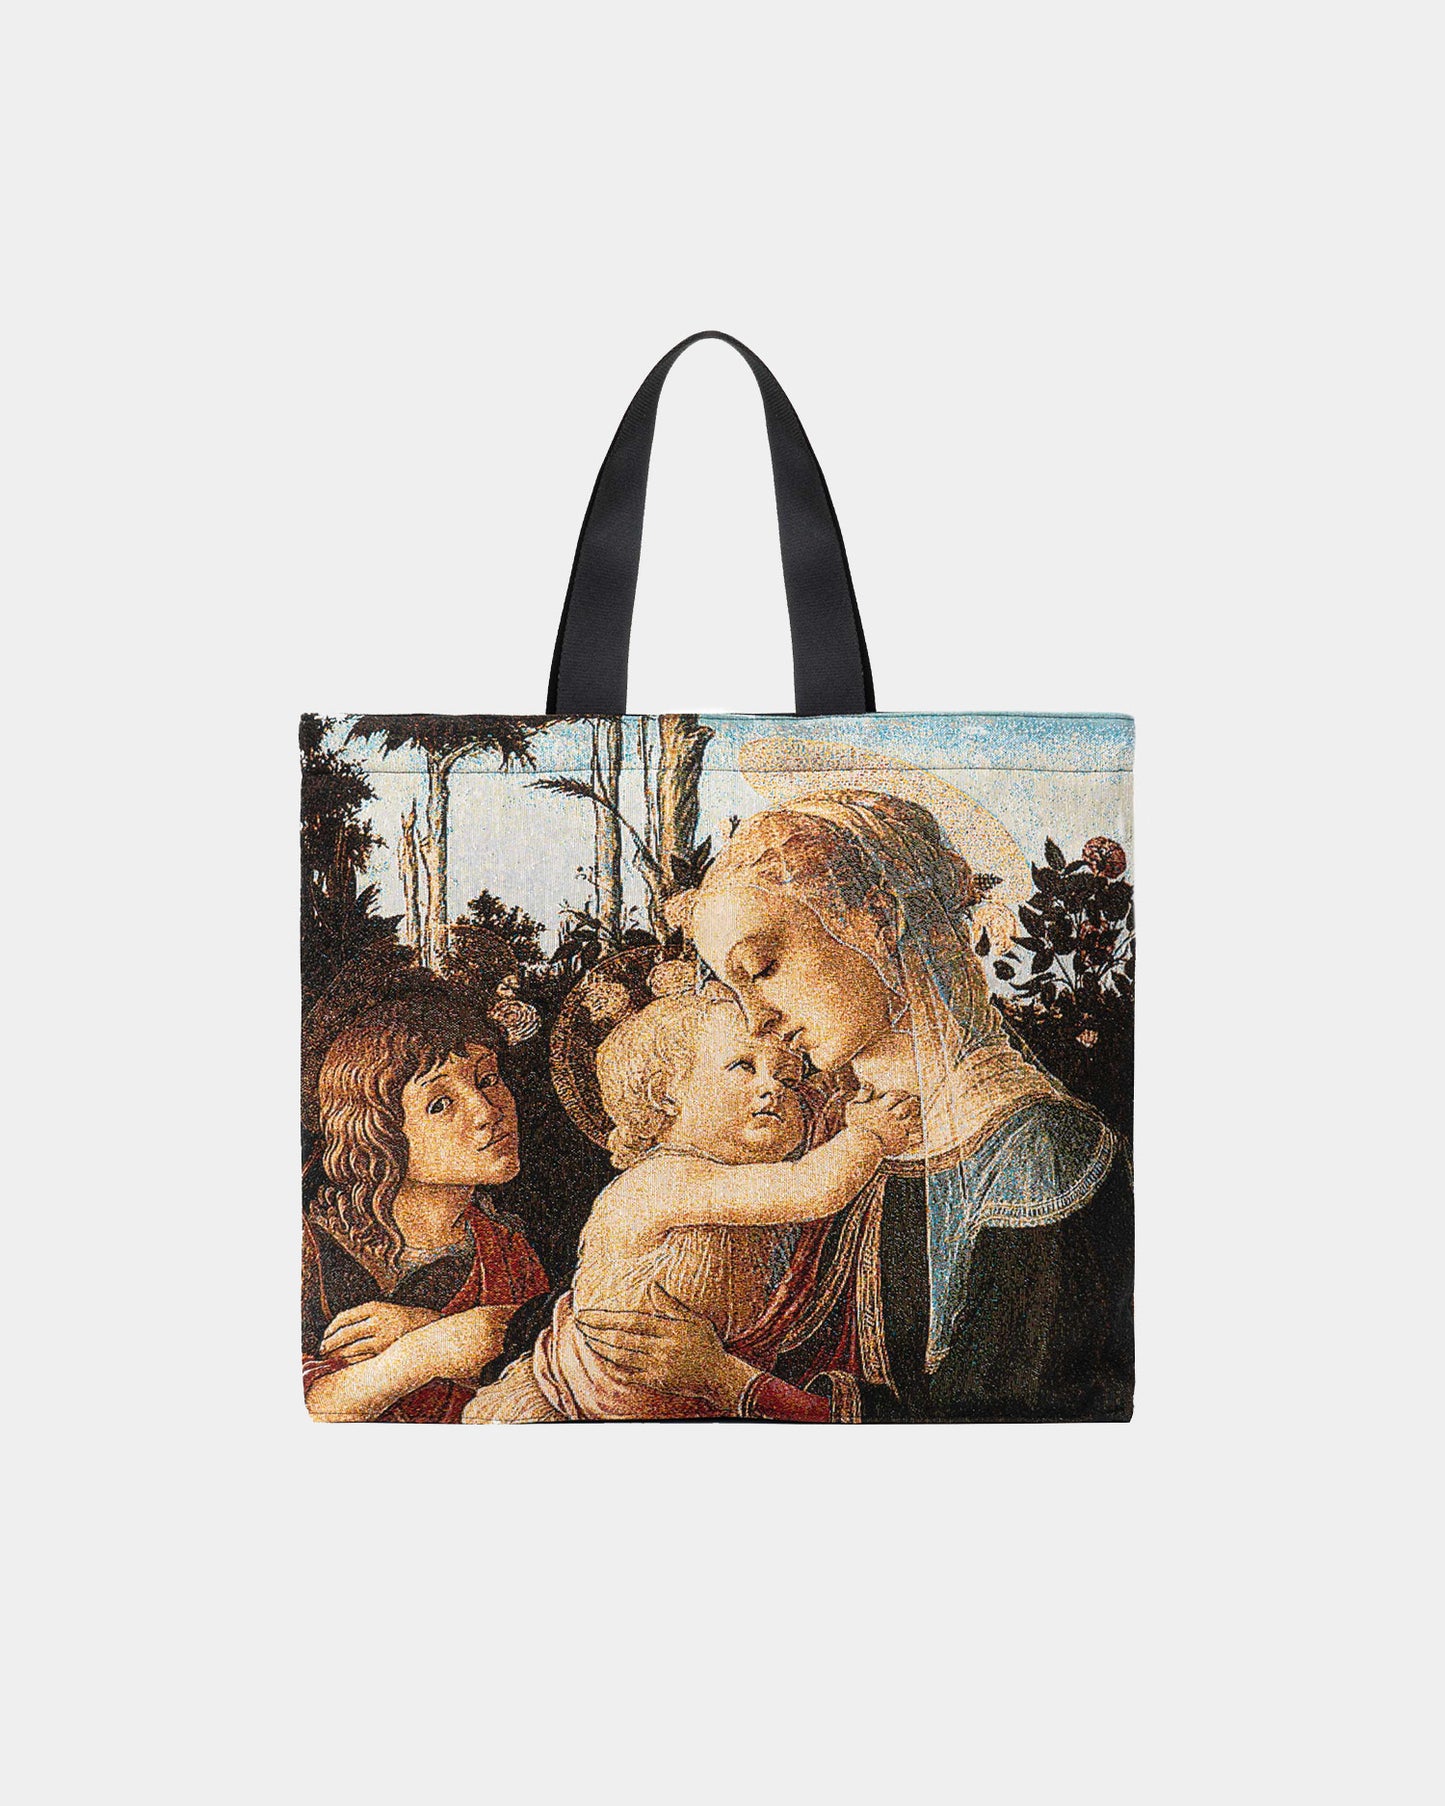 Le "Botticelli" tote bag